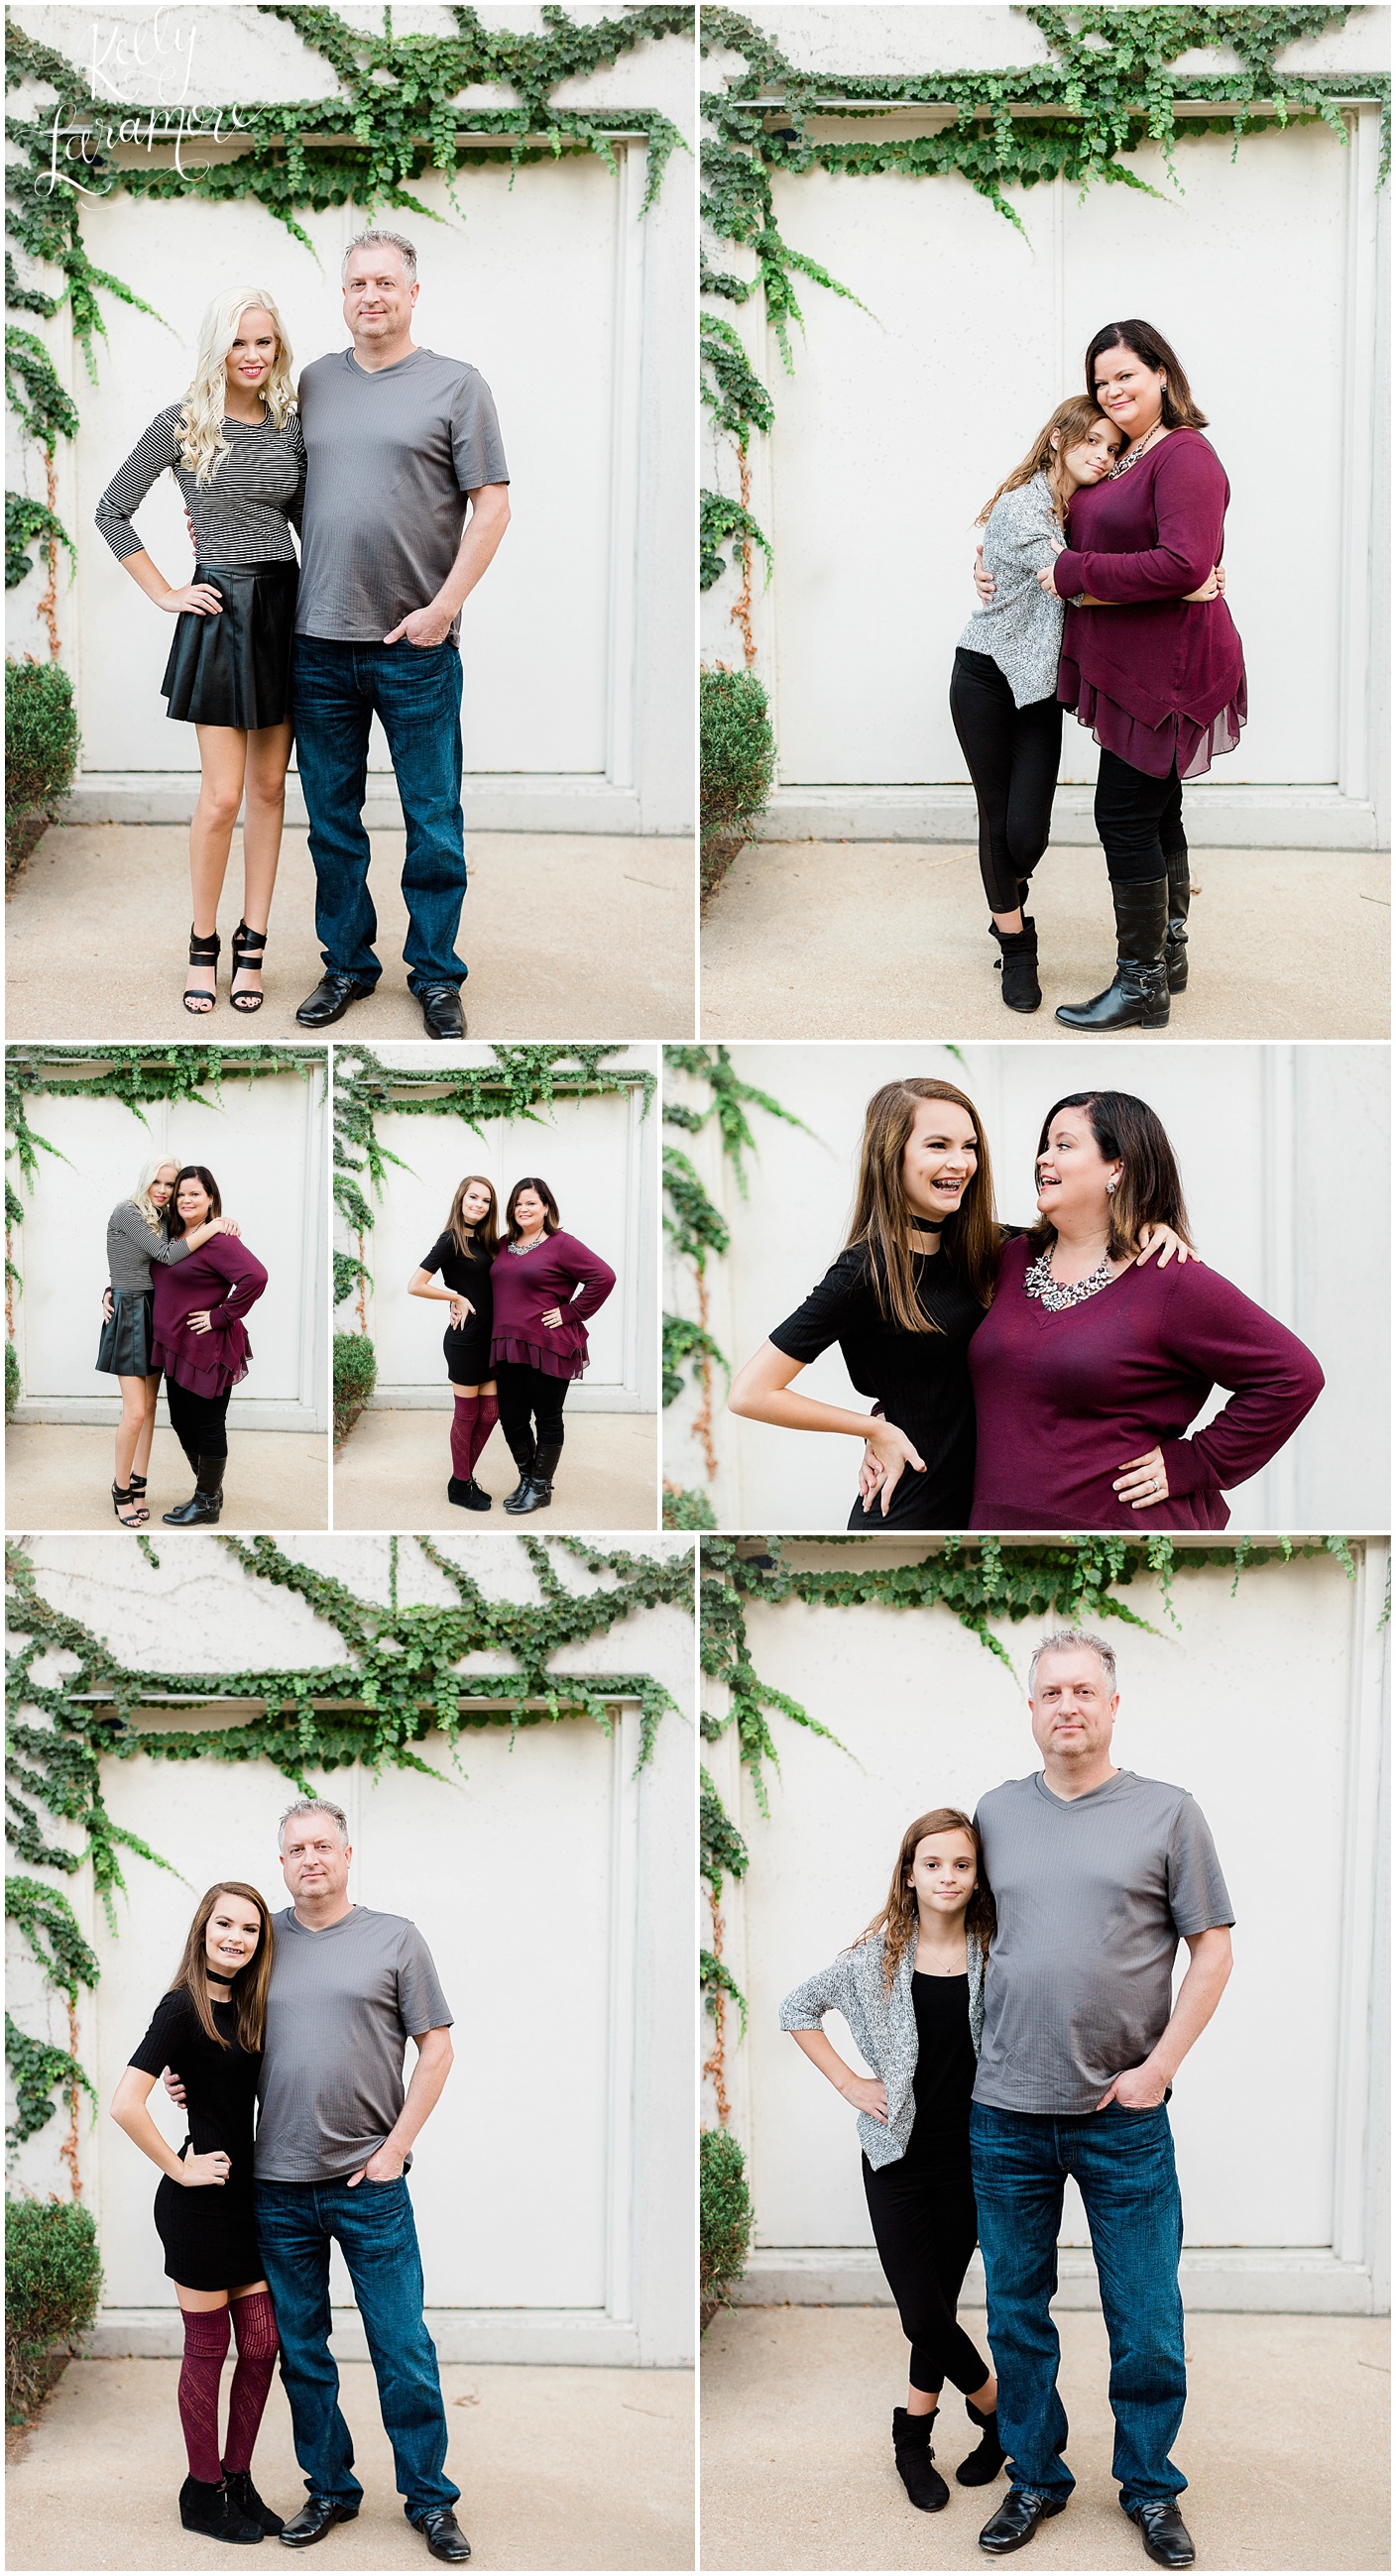 Families, Kelly Laramore Photography, 2015www.kellylaramore.com